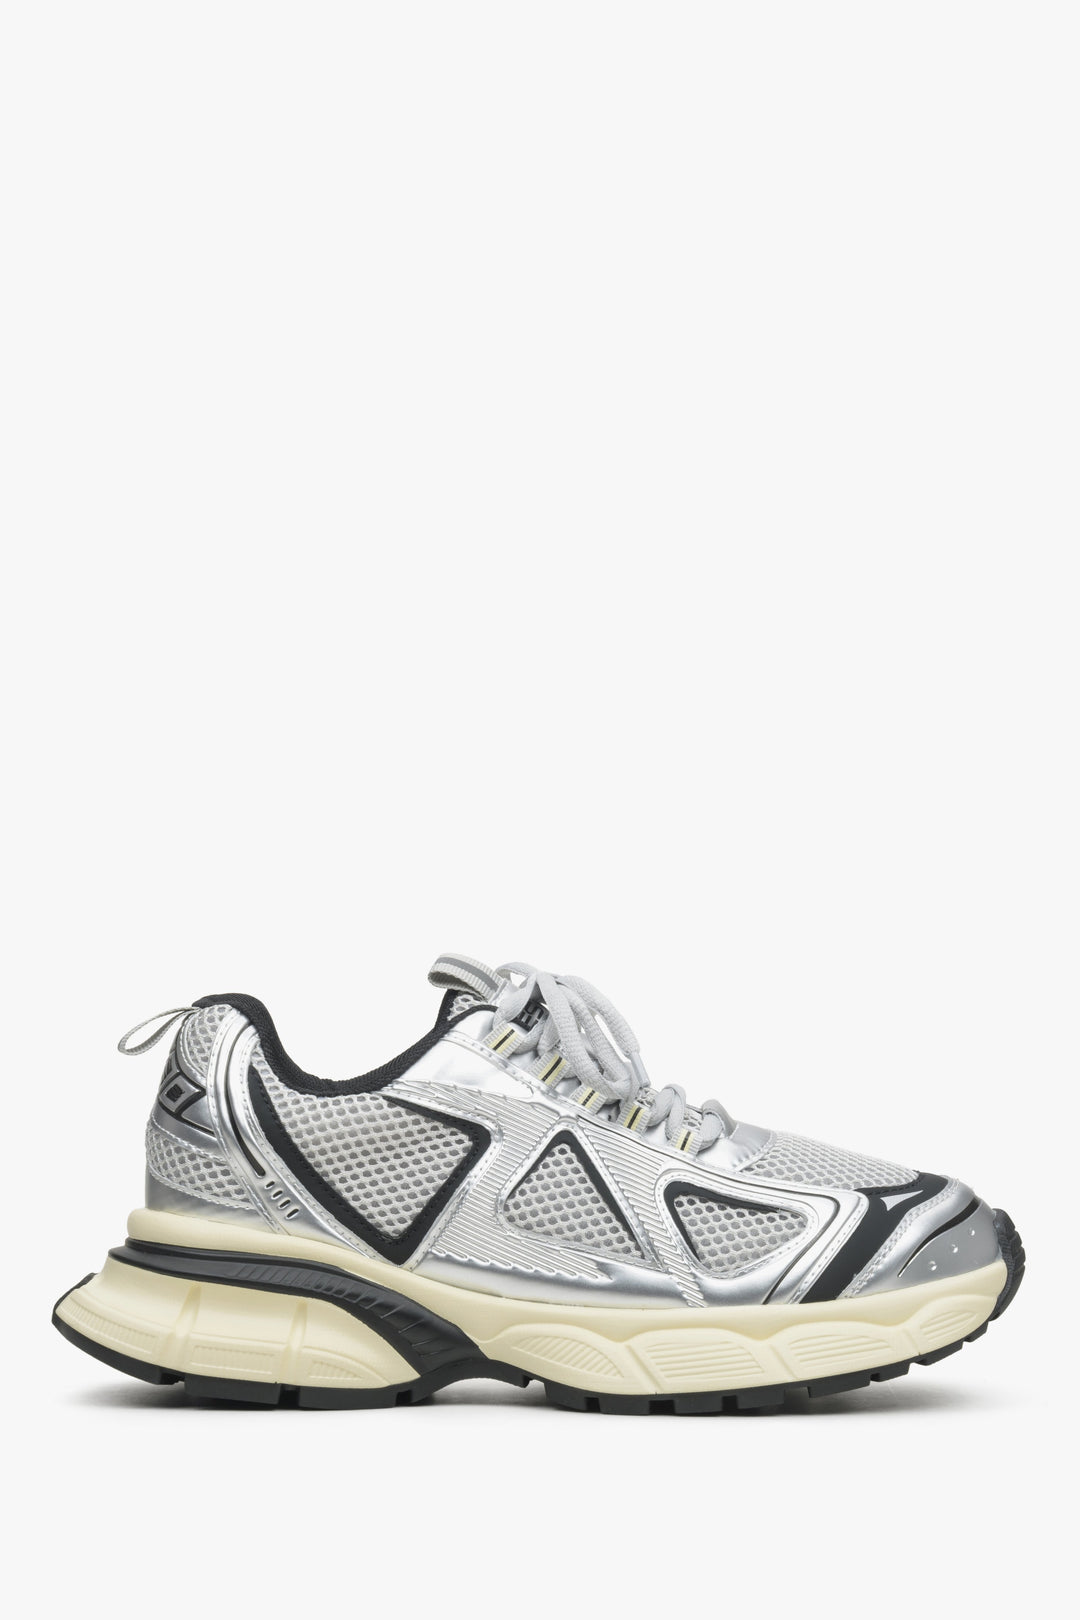 Wygodne srebrno-czarne sneakersy damskie ES 8 - profil buta.